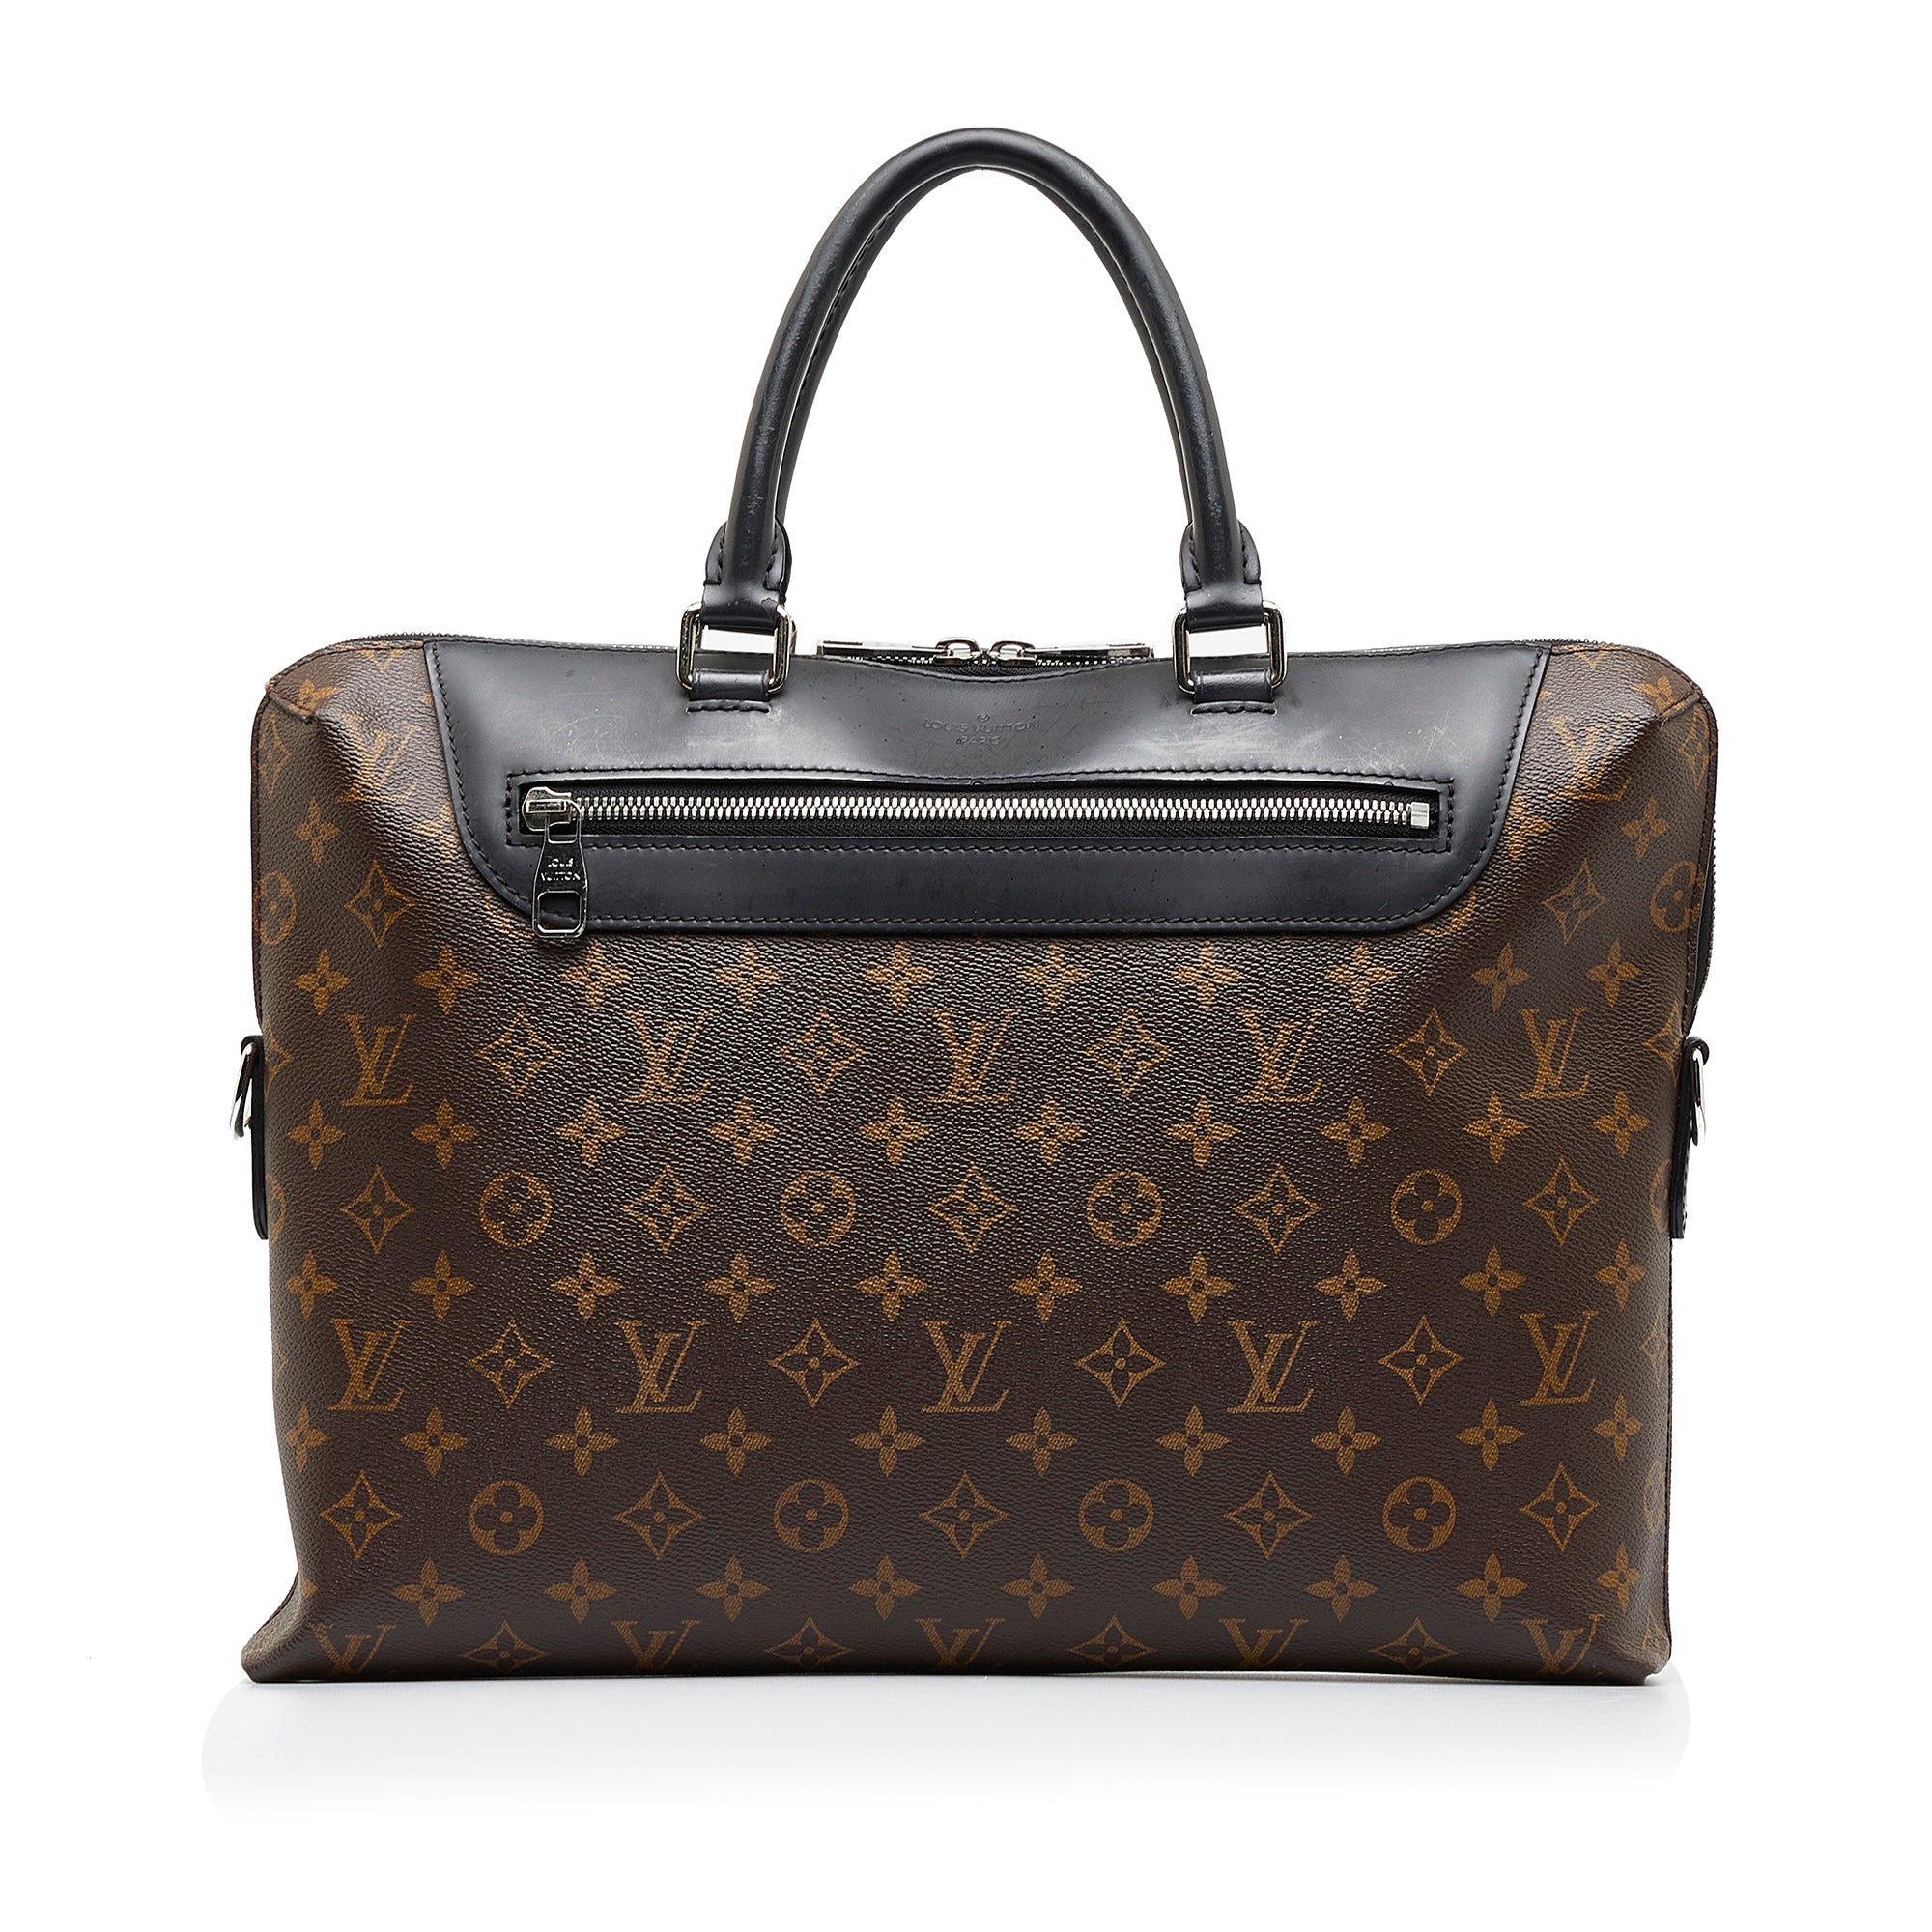 Louis Vuitton Neo Greenwich travel bag in brown canvas, golden